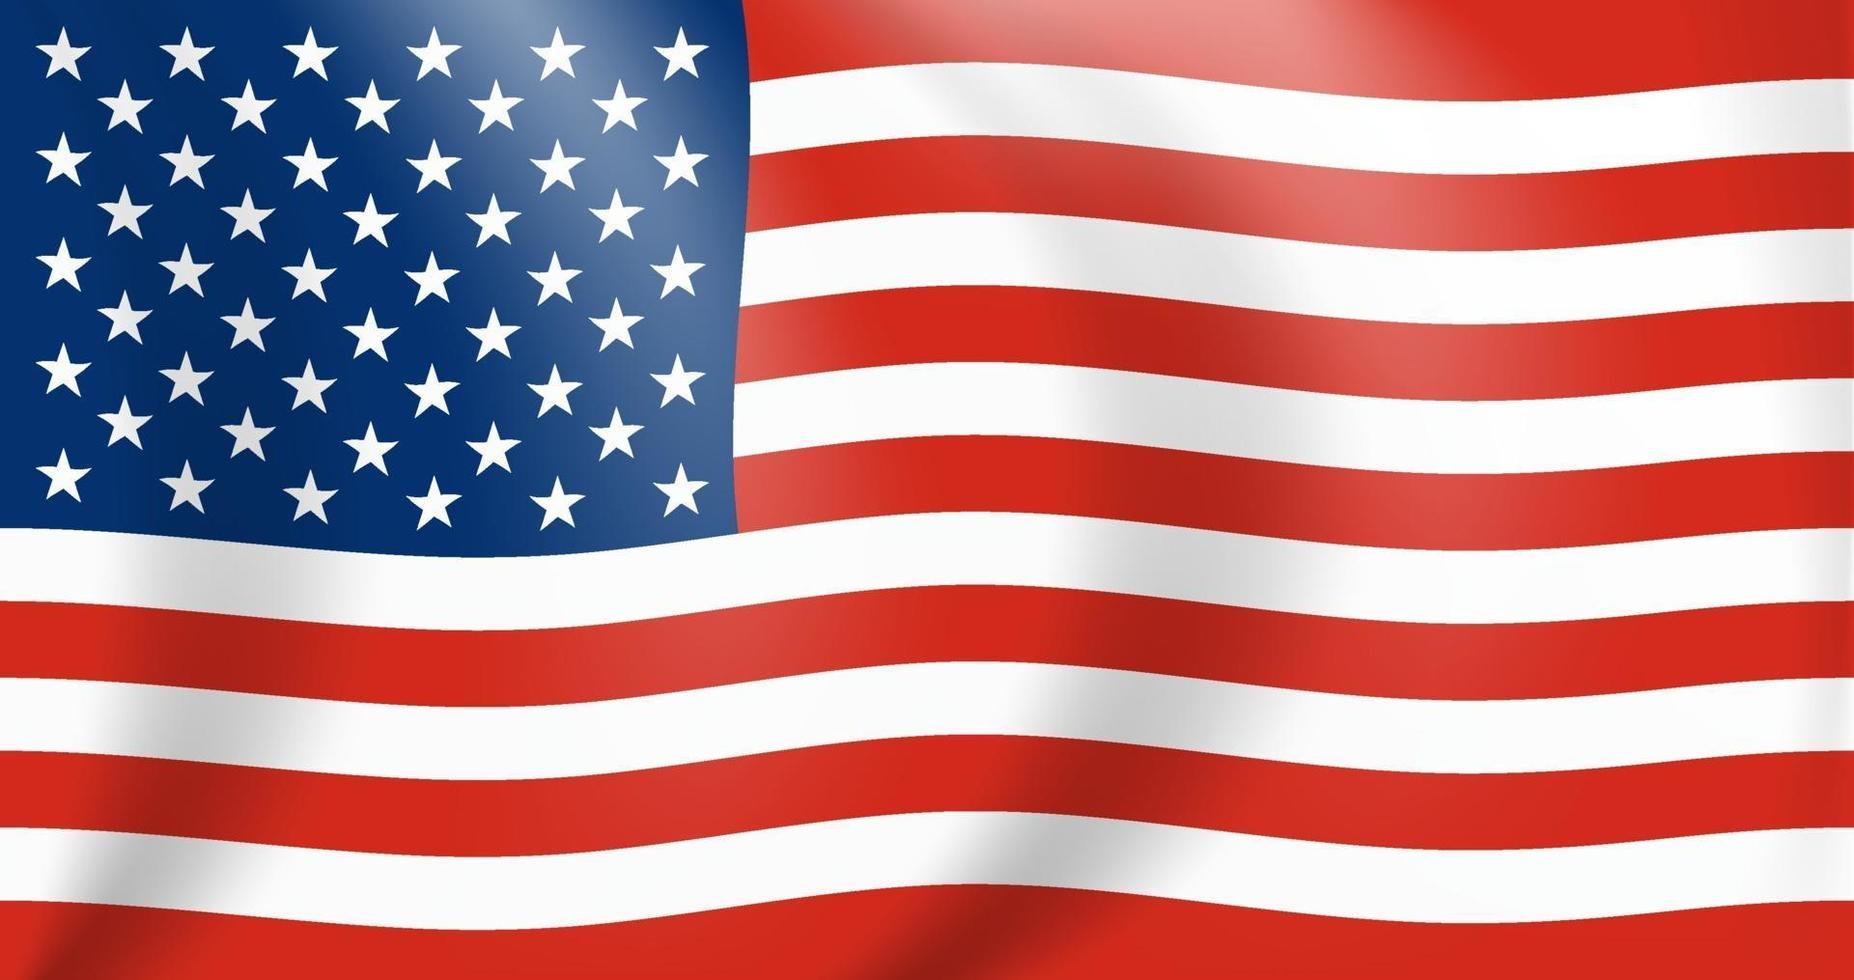 National flag of America. Waving USA banner vector